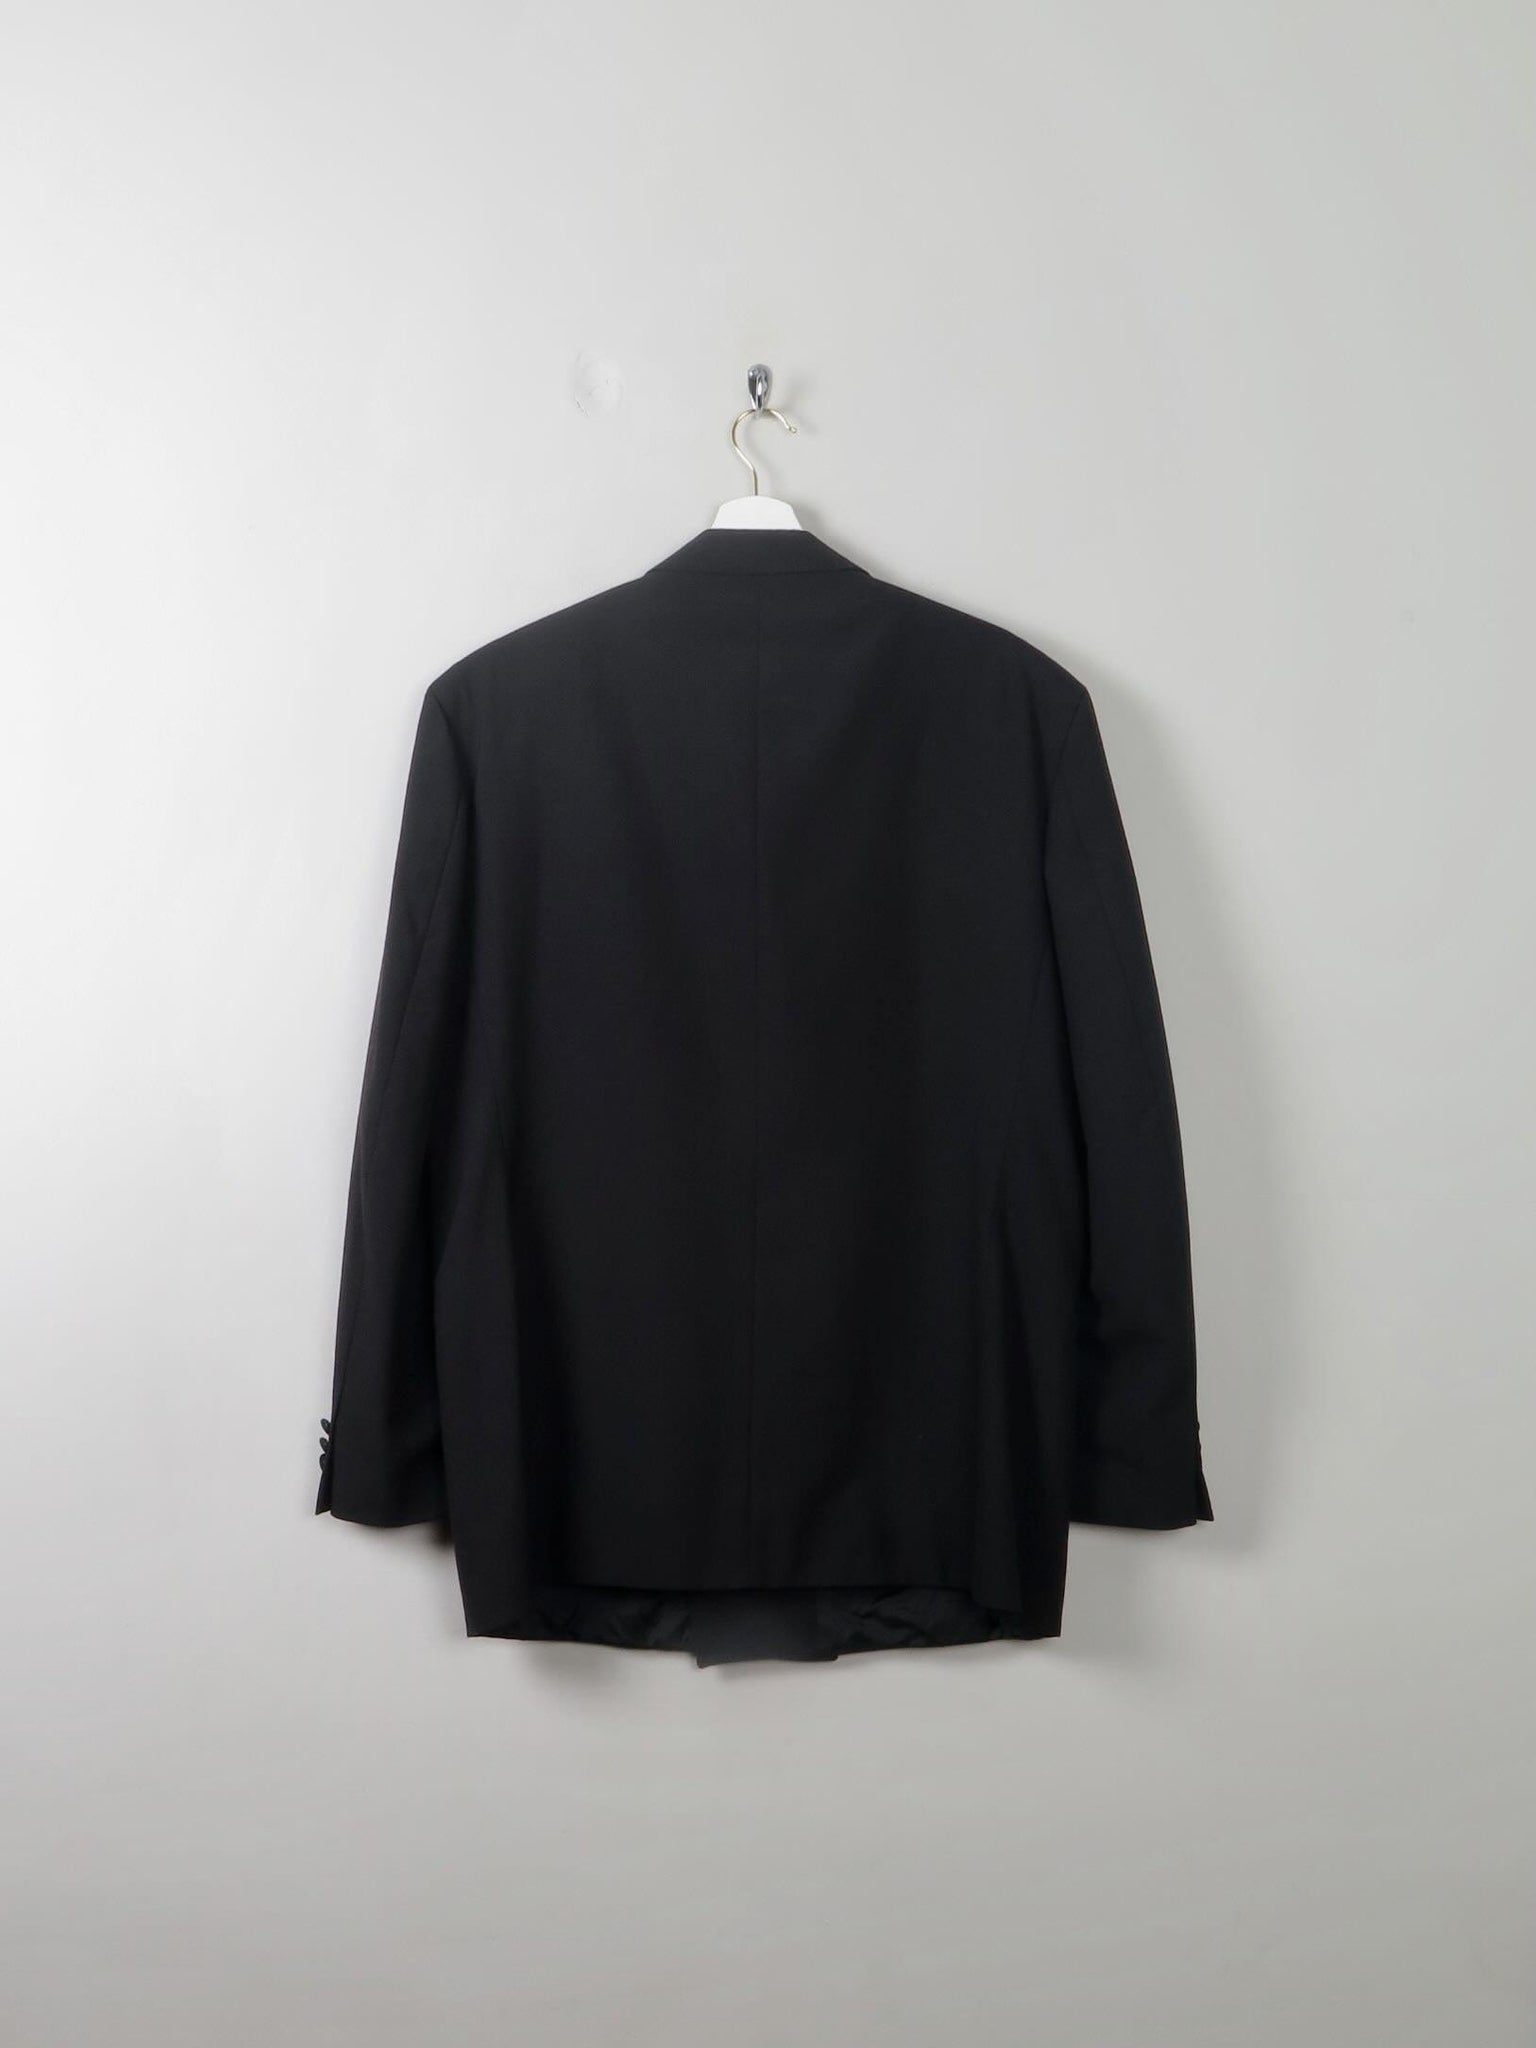 Men's Black Vintage Tuxedo Jacket 42" - The Harlequin